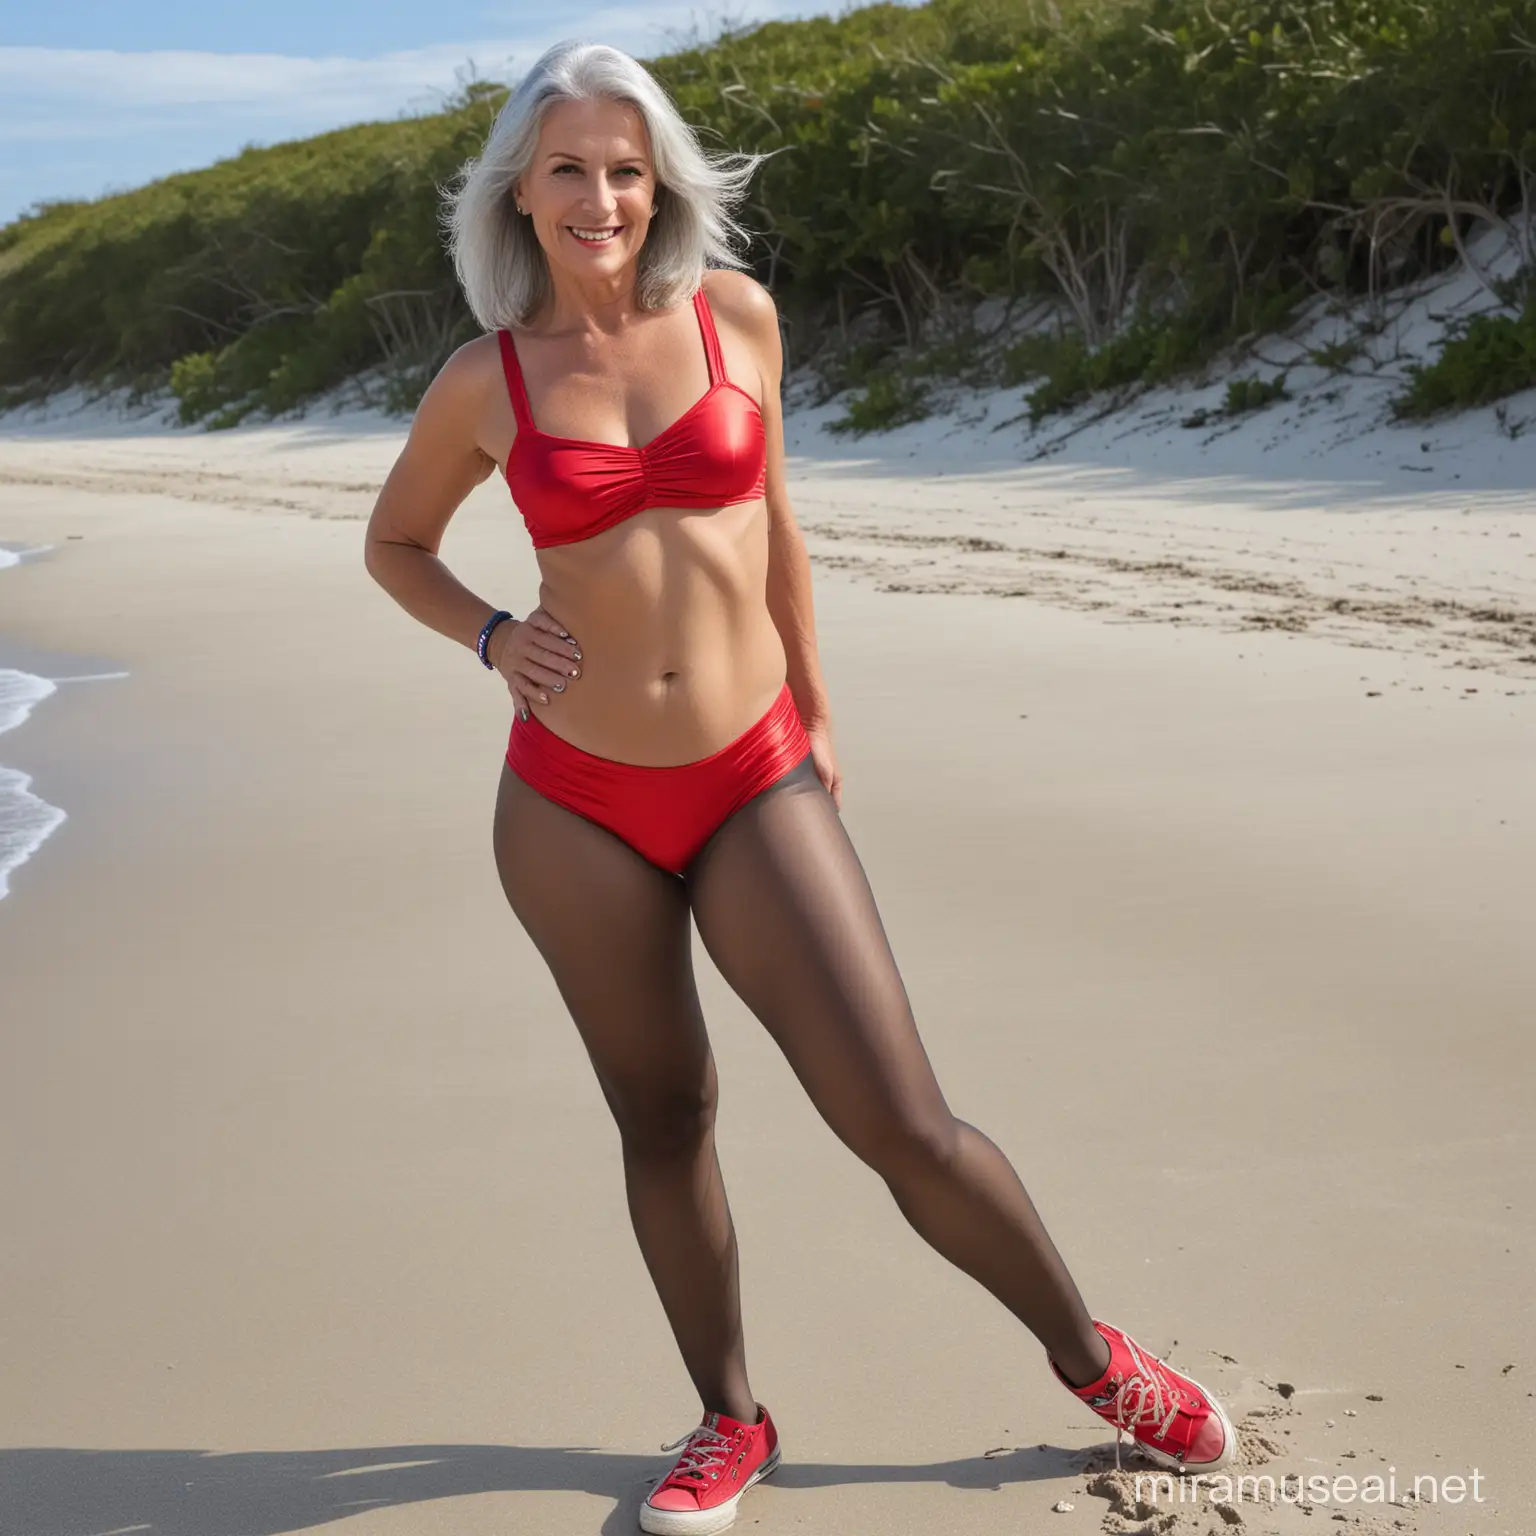 Elegant Mature Lady in Red Bikini Top and Denim Shorts at Florida Beach